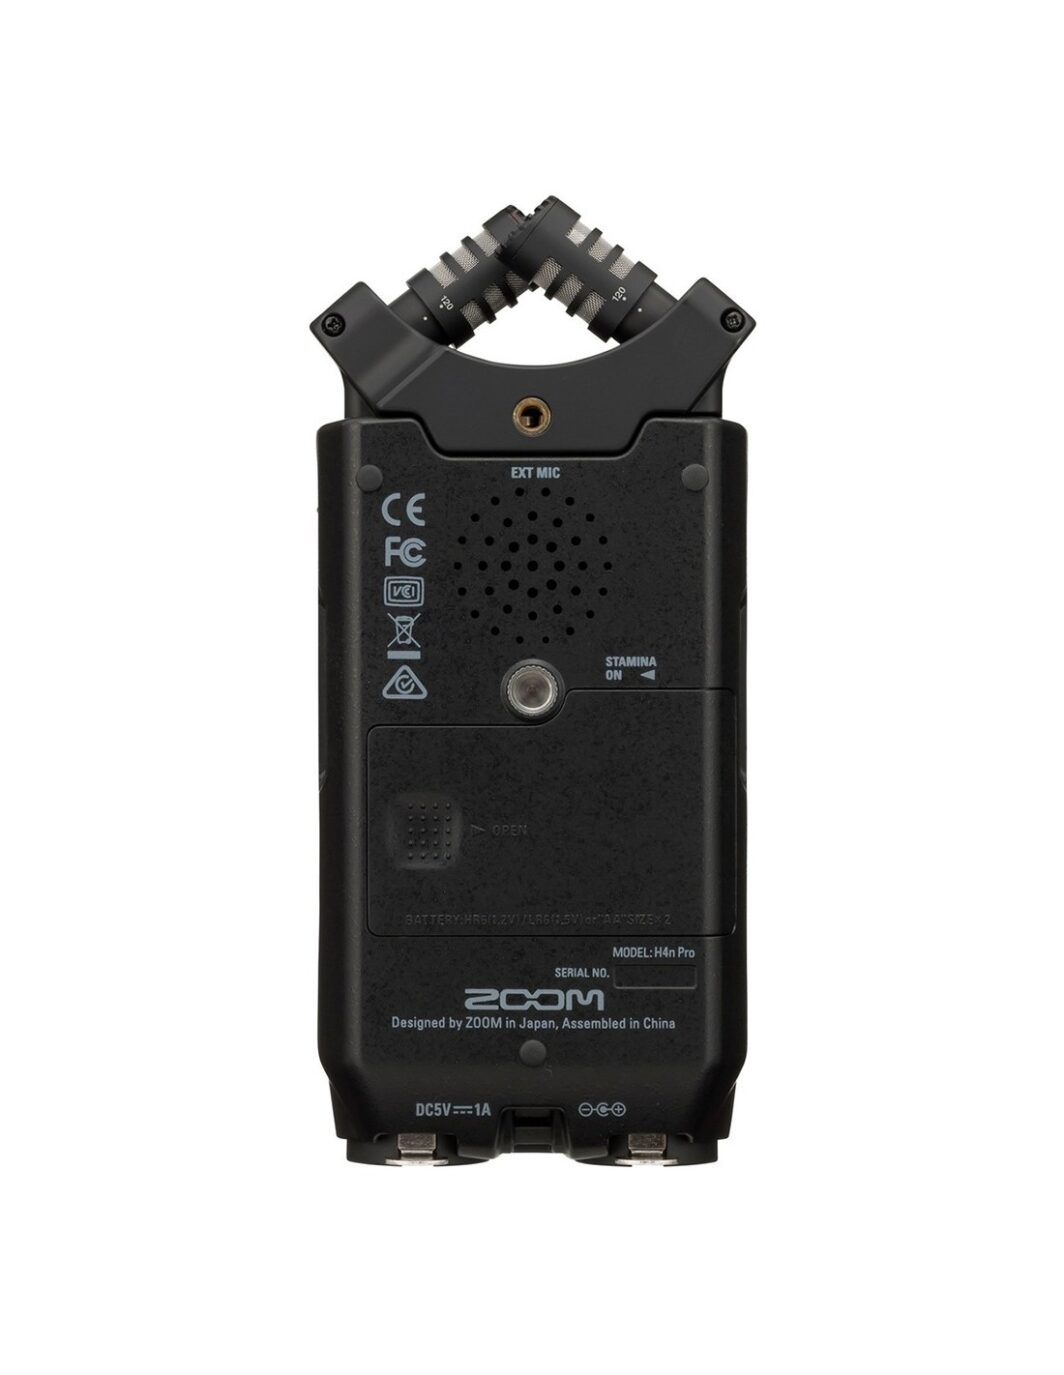 Zoom H4n Pro Handy Recorder All Black